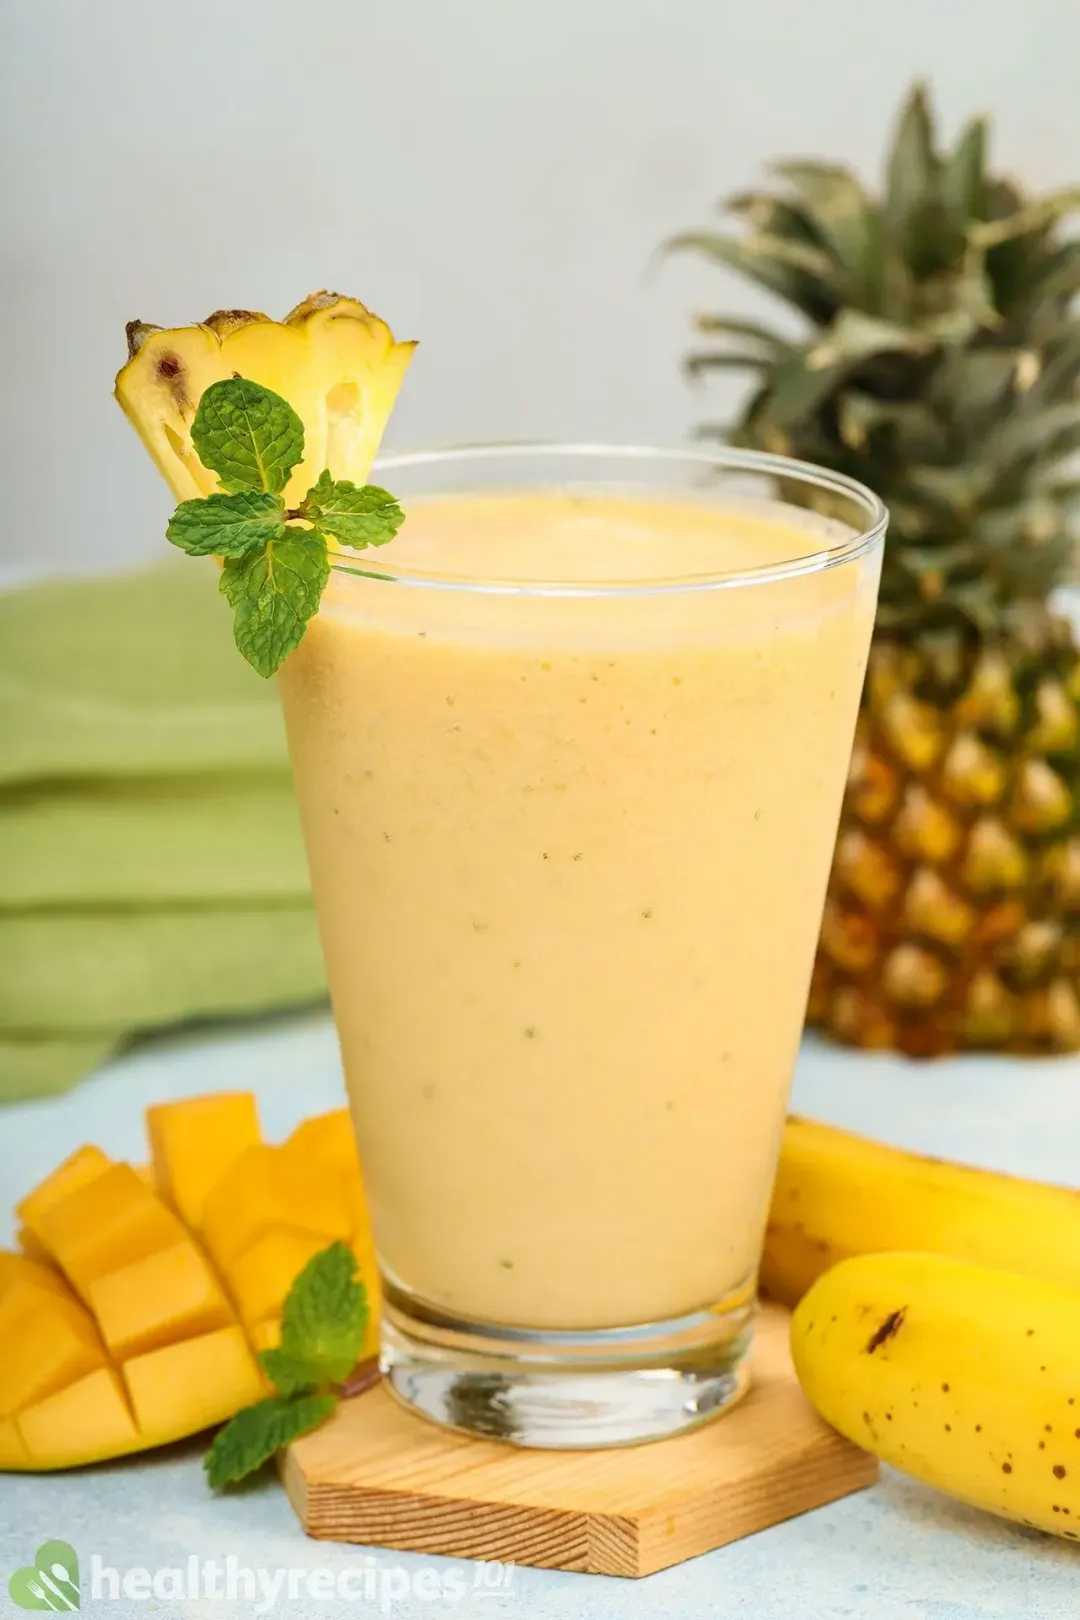 Homemade mango pineapple banana smoothie recipe